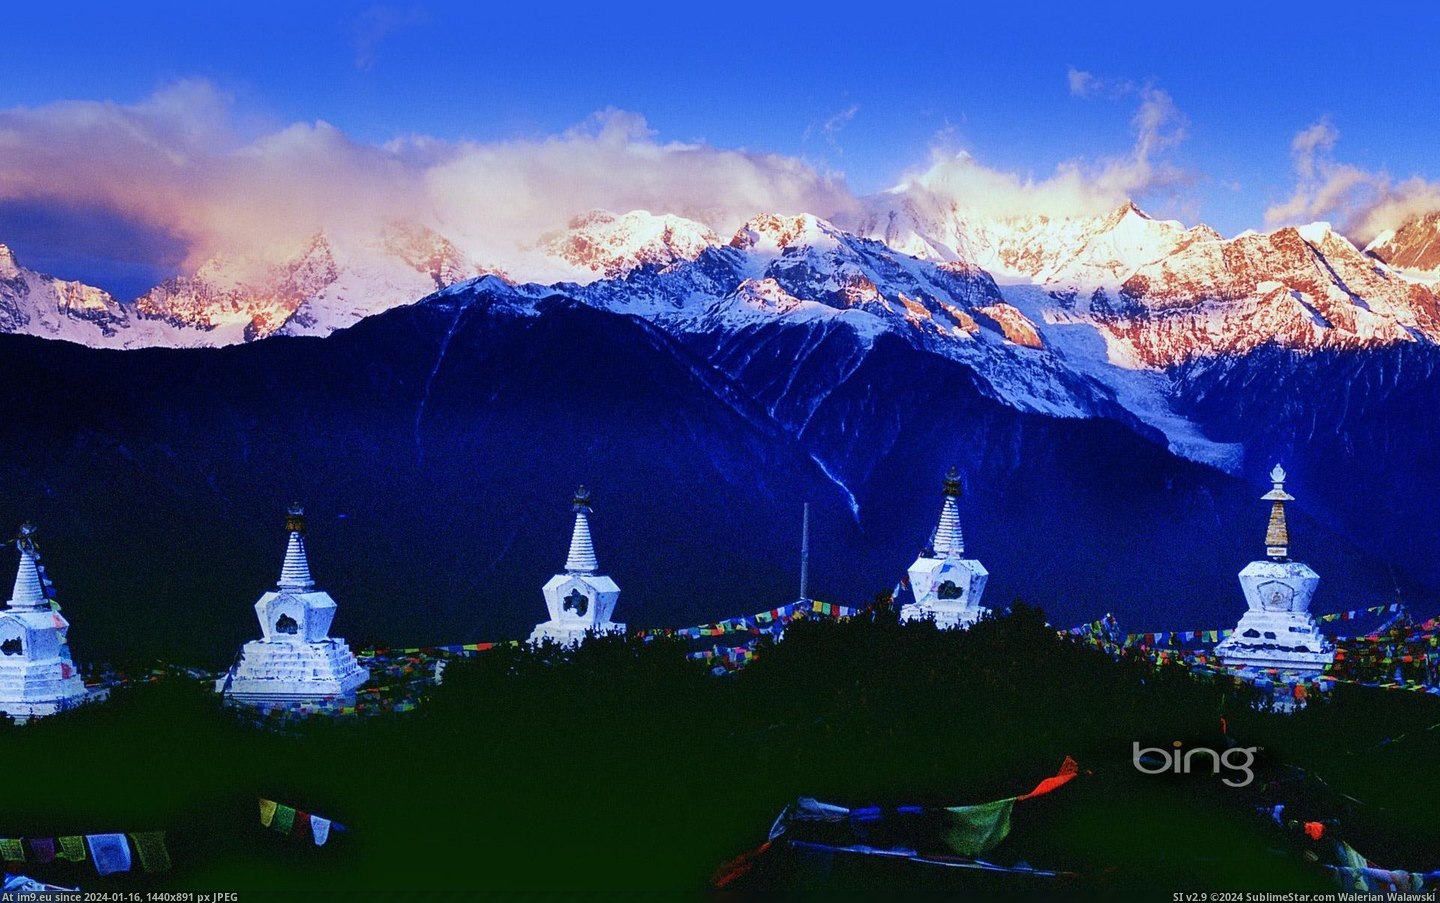 Stupas representing 13 peaks of Meili Snow Mountain, DiQing Tibetan Autonomous Prefecture, Yunnan Province, China (in Bing Photos November 2012)